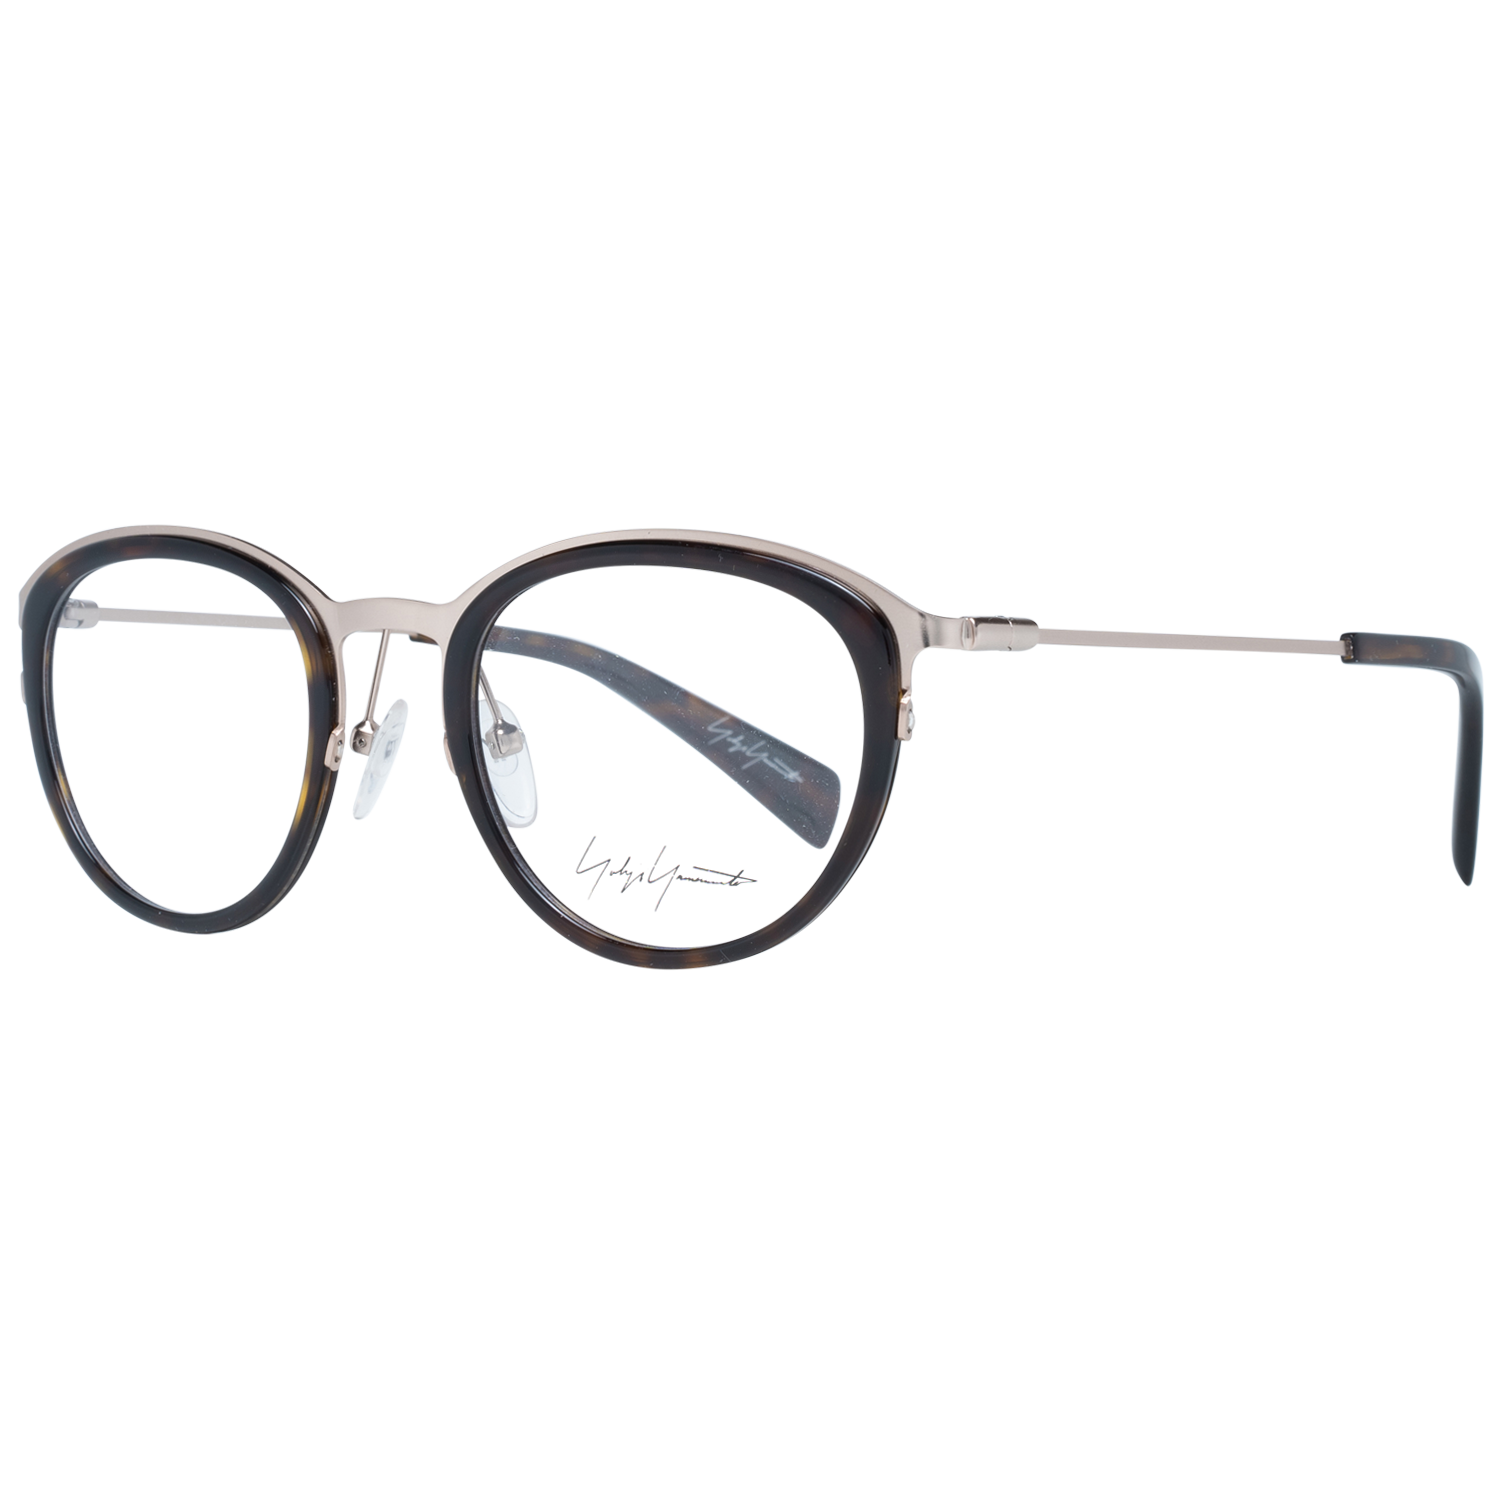 Yohji Yamamoto Frames Yohji Yamamoto Optical Frame YY1023 127 48 Eyeglasses Eyewear UK USA Australia 